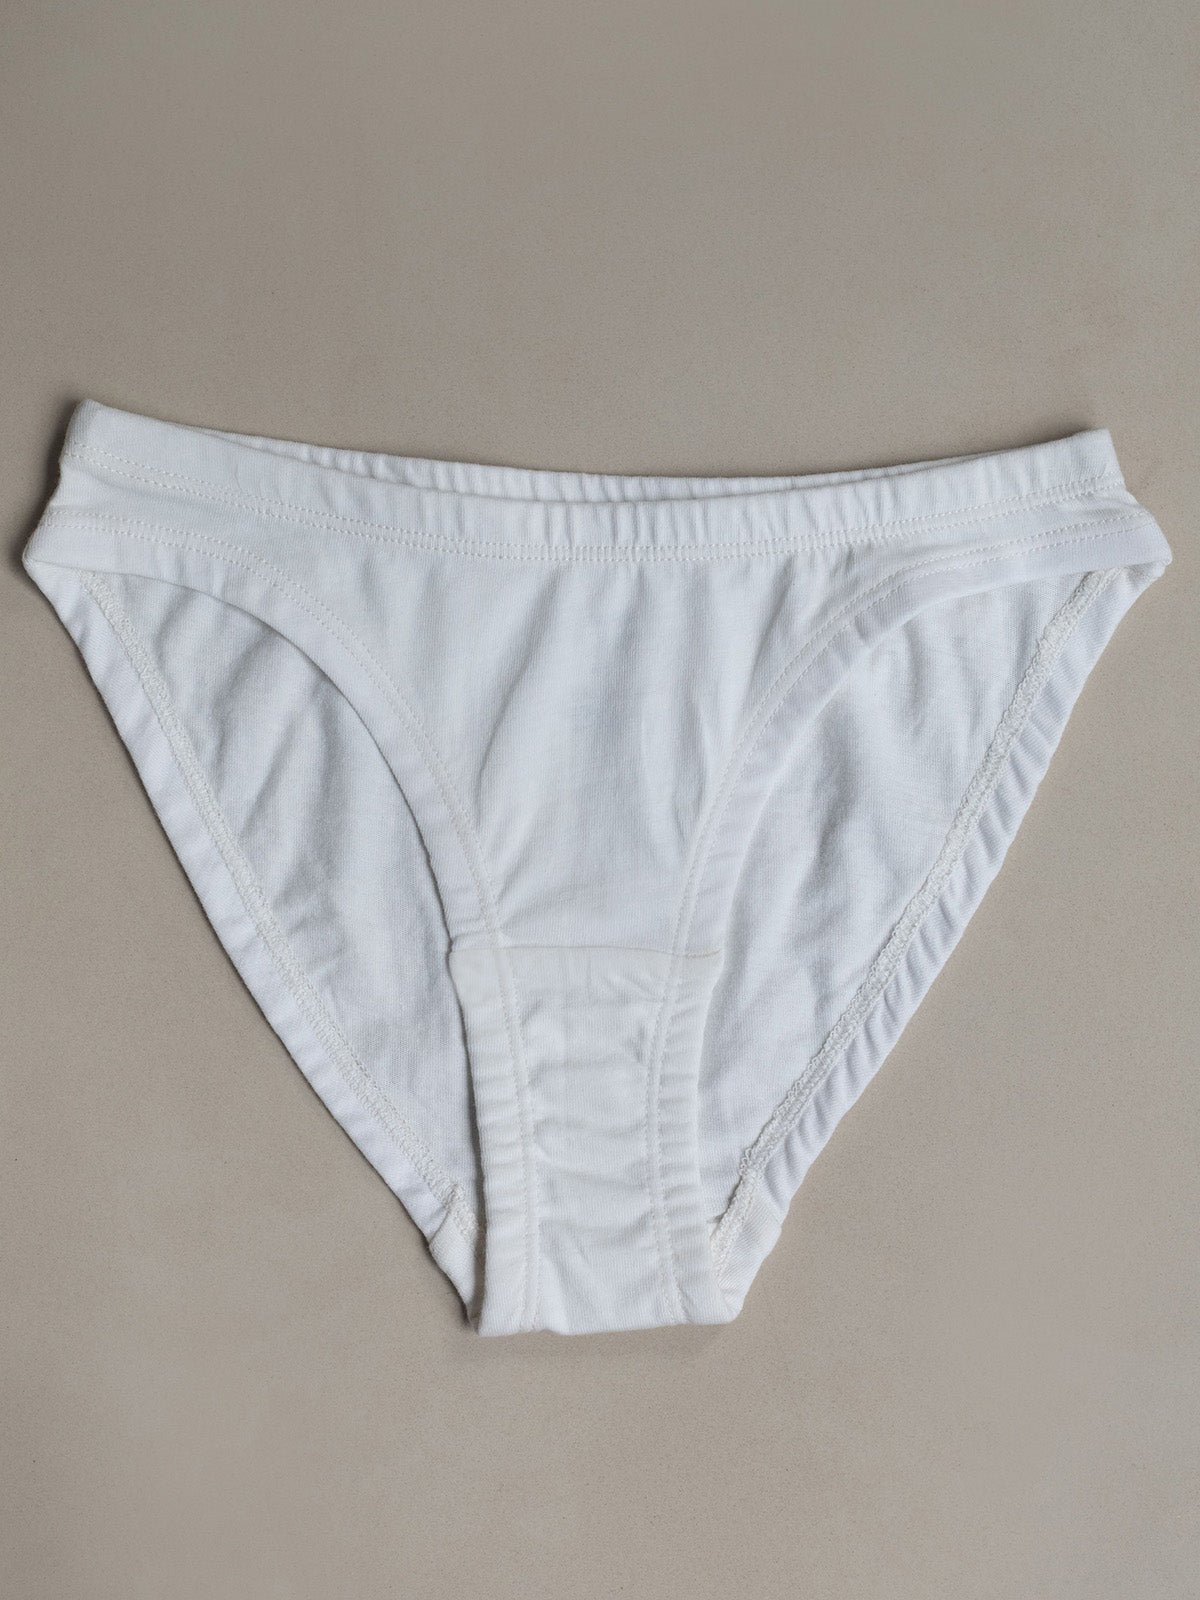 Buy Women's Bikini Underwear, 100% Organic Cotton